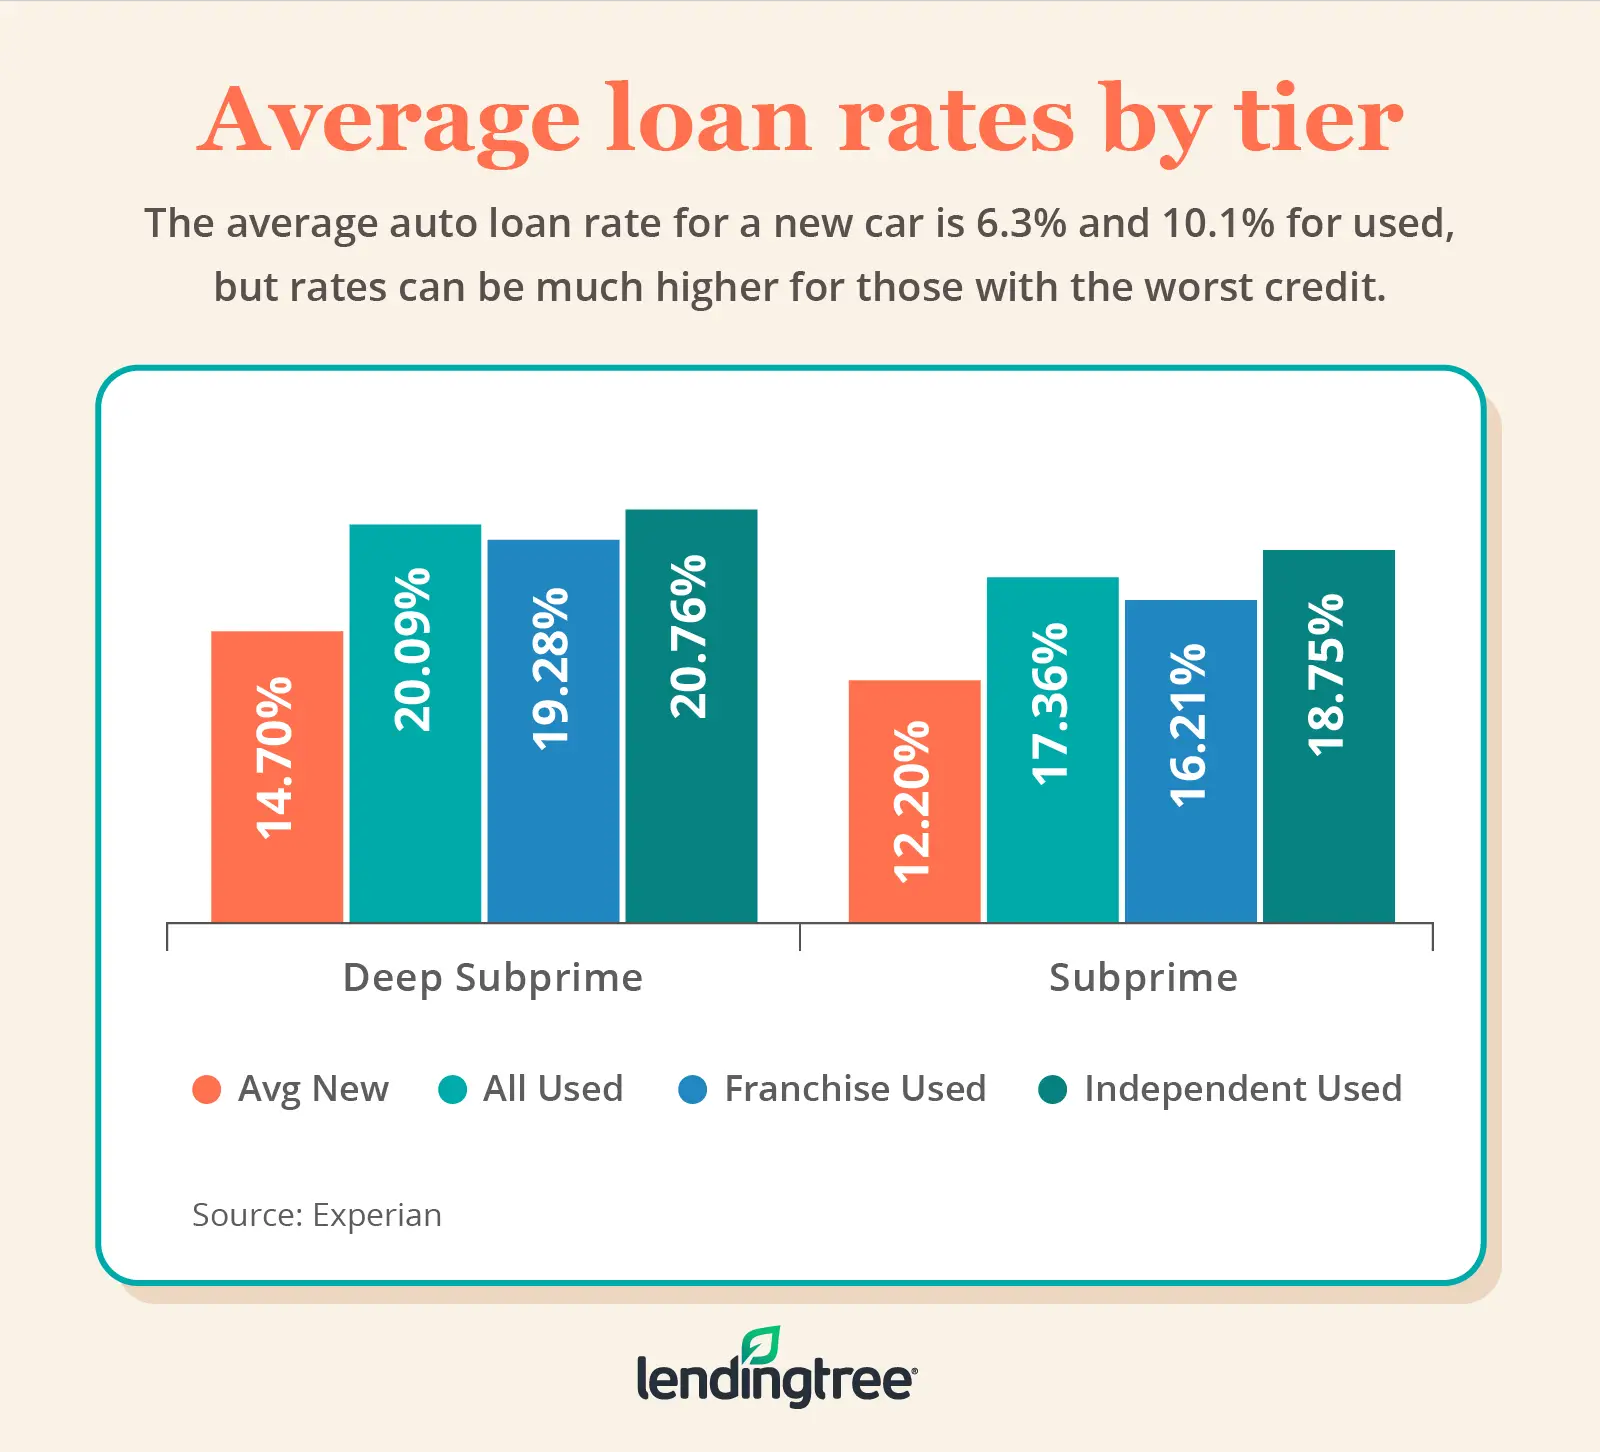 Subprime Auto Loans: Getting the Best Loan